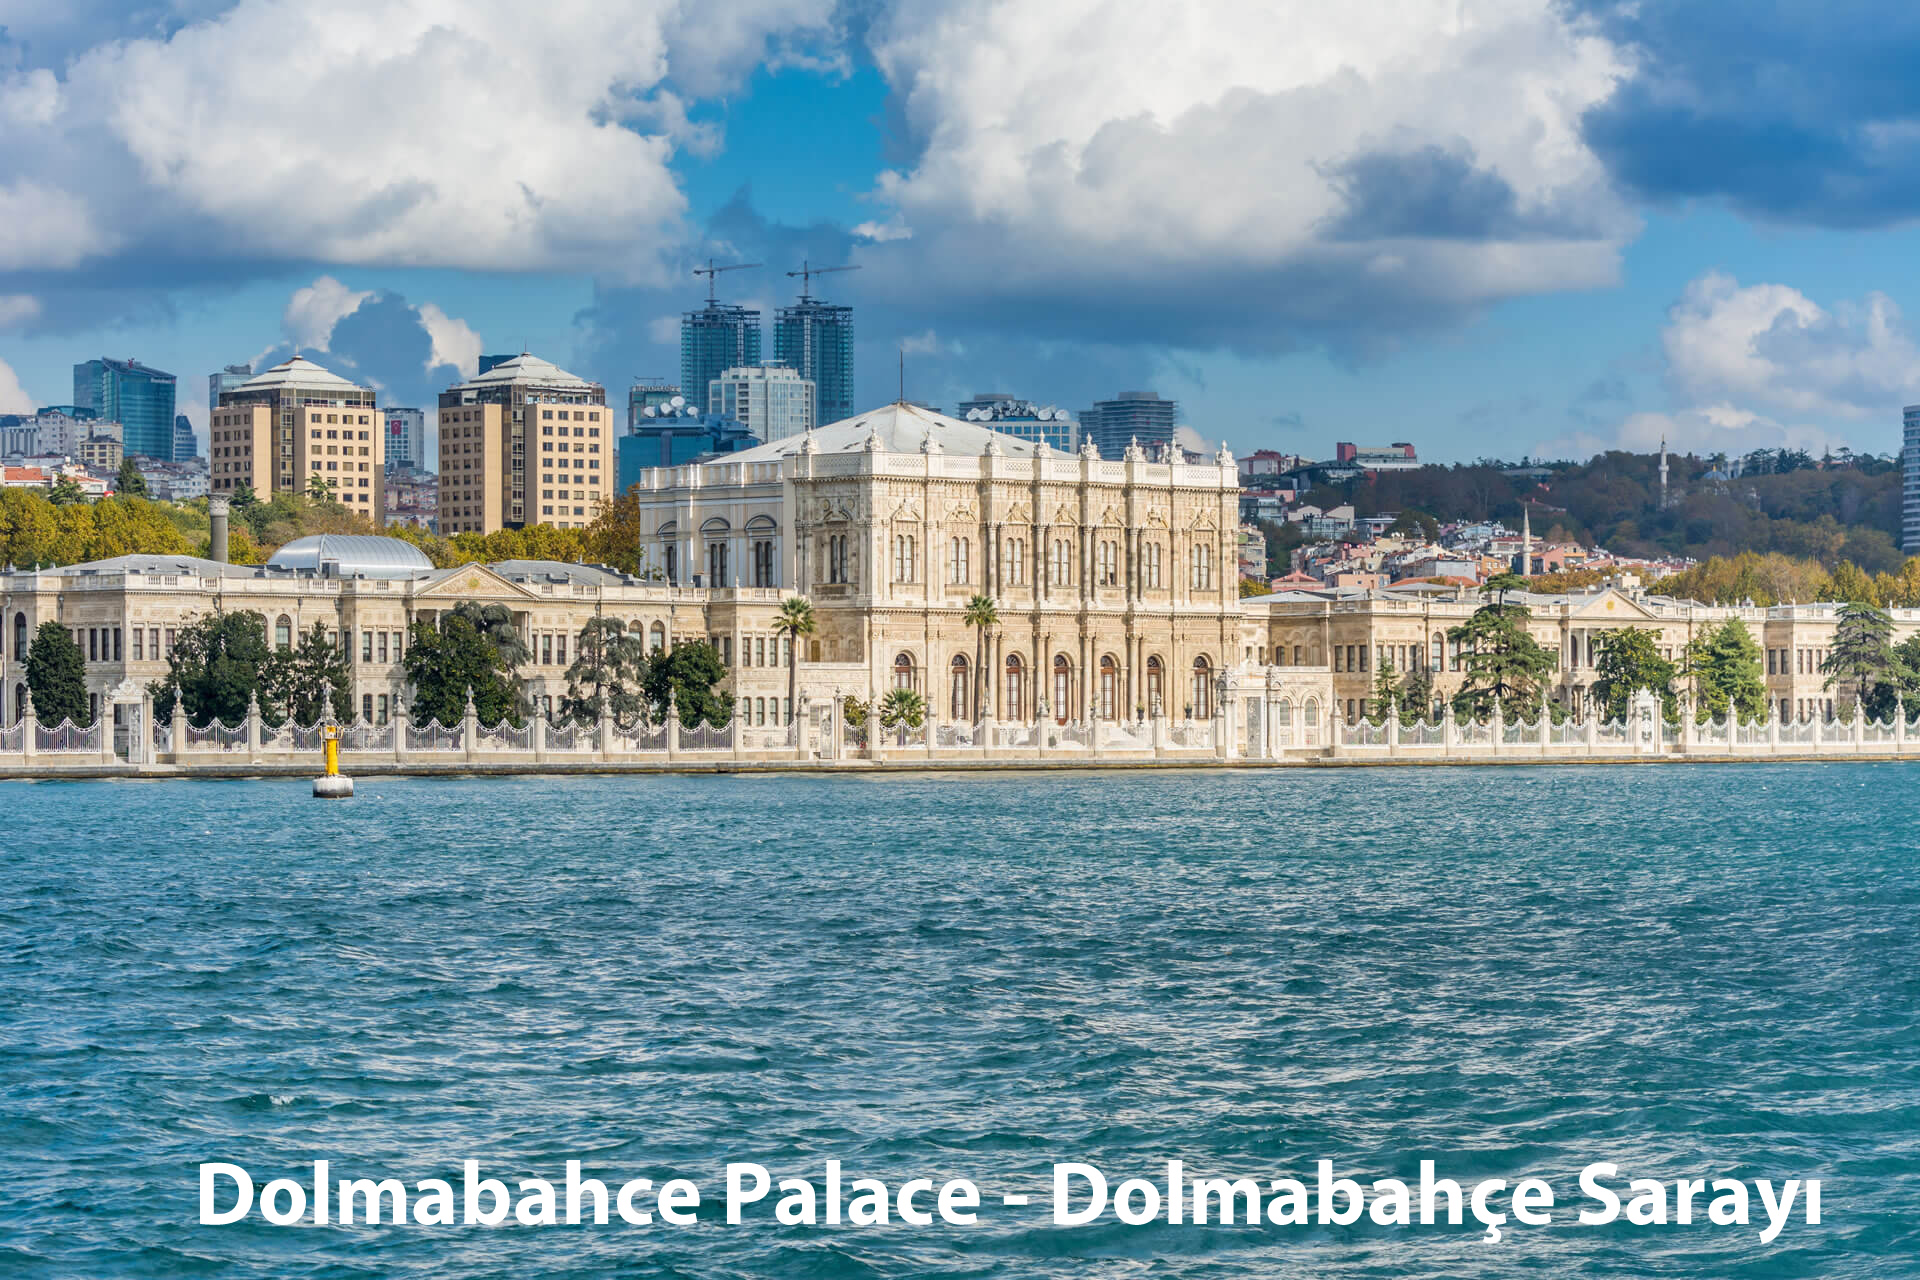 Dolmabahce Palace - Dolmabahçe Sarayi